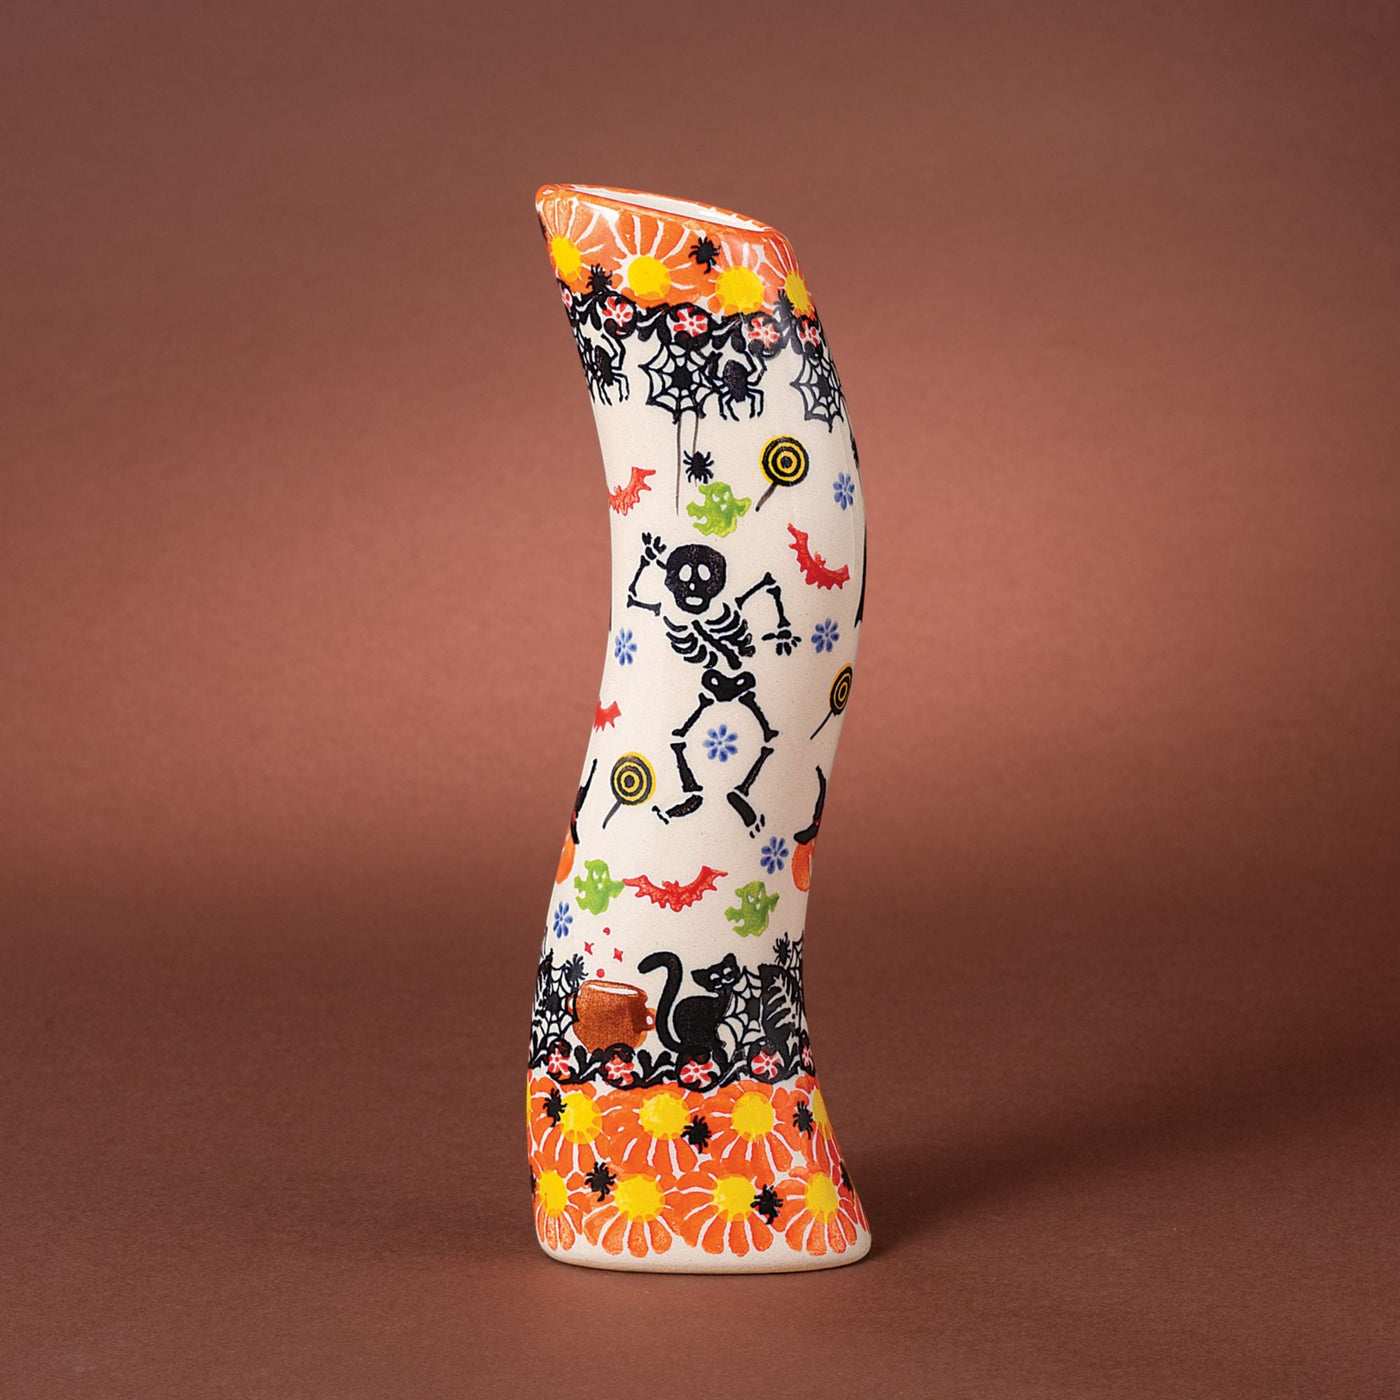 2023 Edition Halloween Polish Pottery Vase